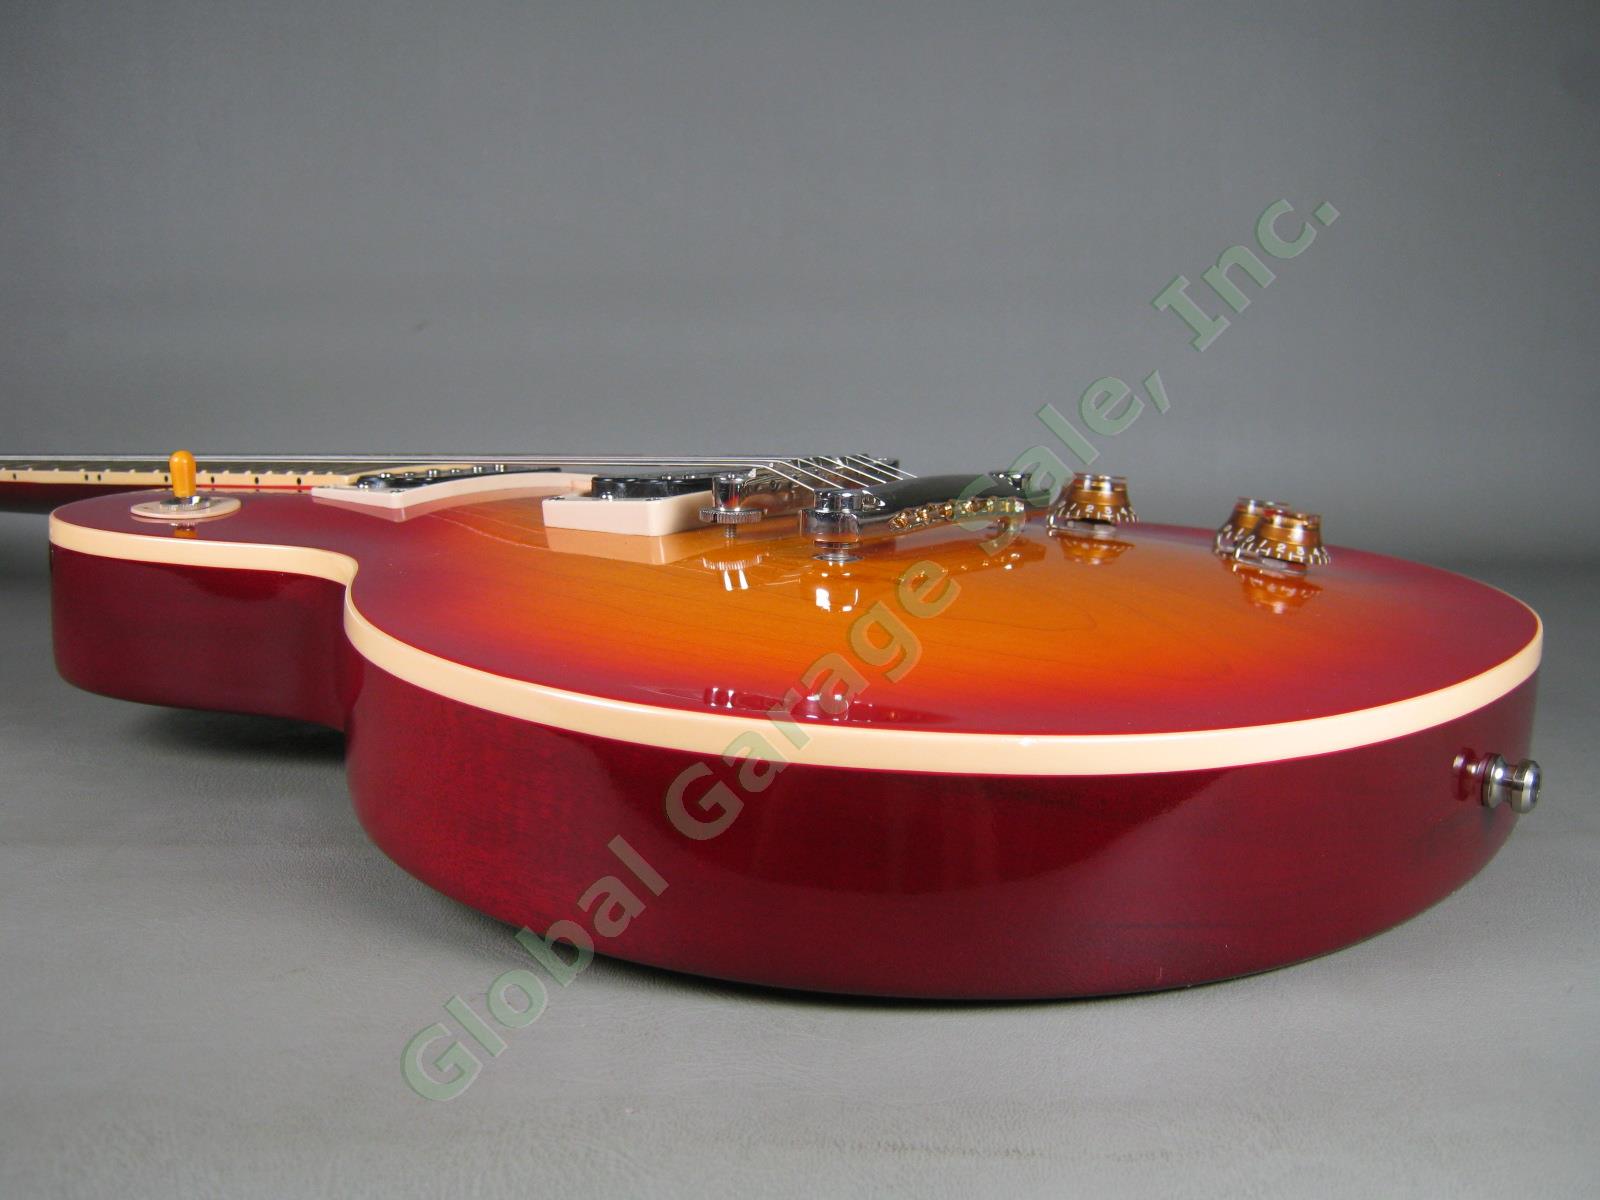 MINT! 2001 Gibson Les Paul Classic 1960 Reissue Sunburst Guitar One Owner w/Case 12